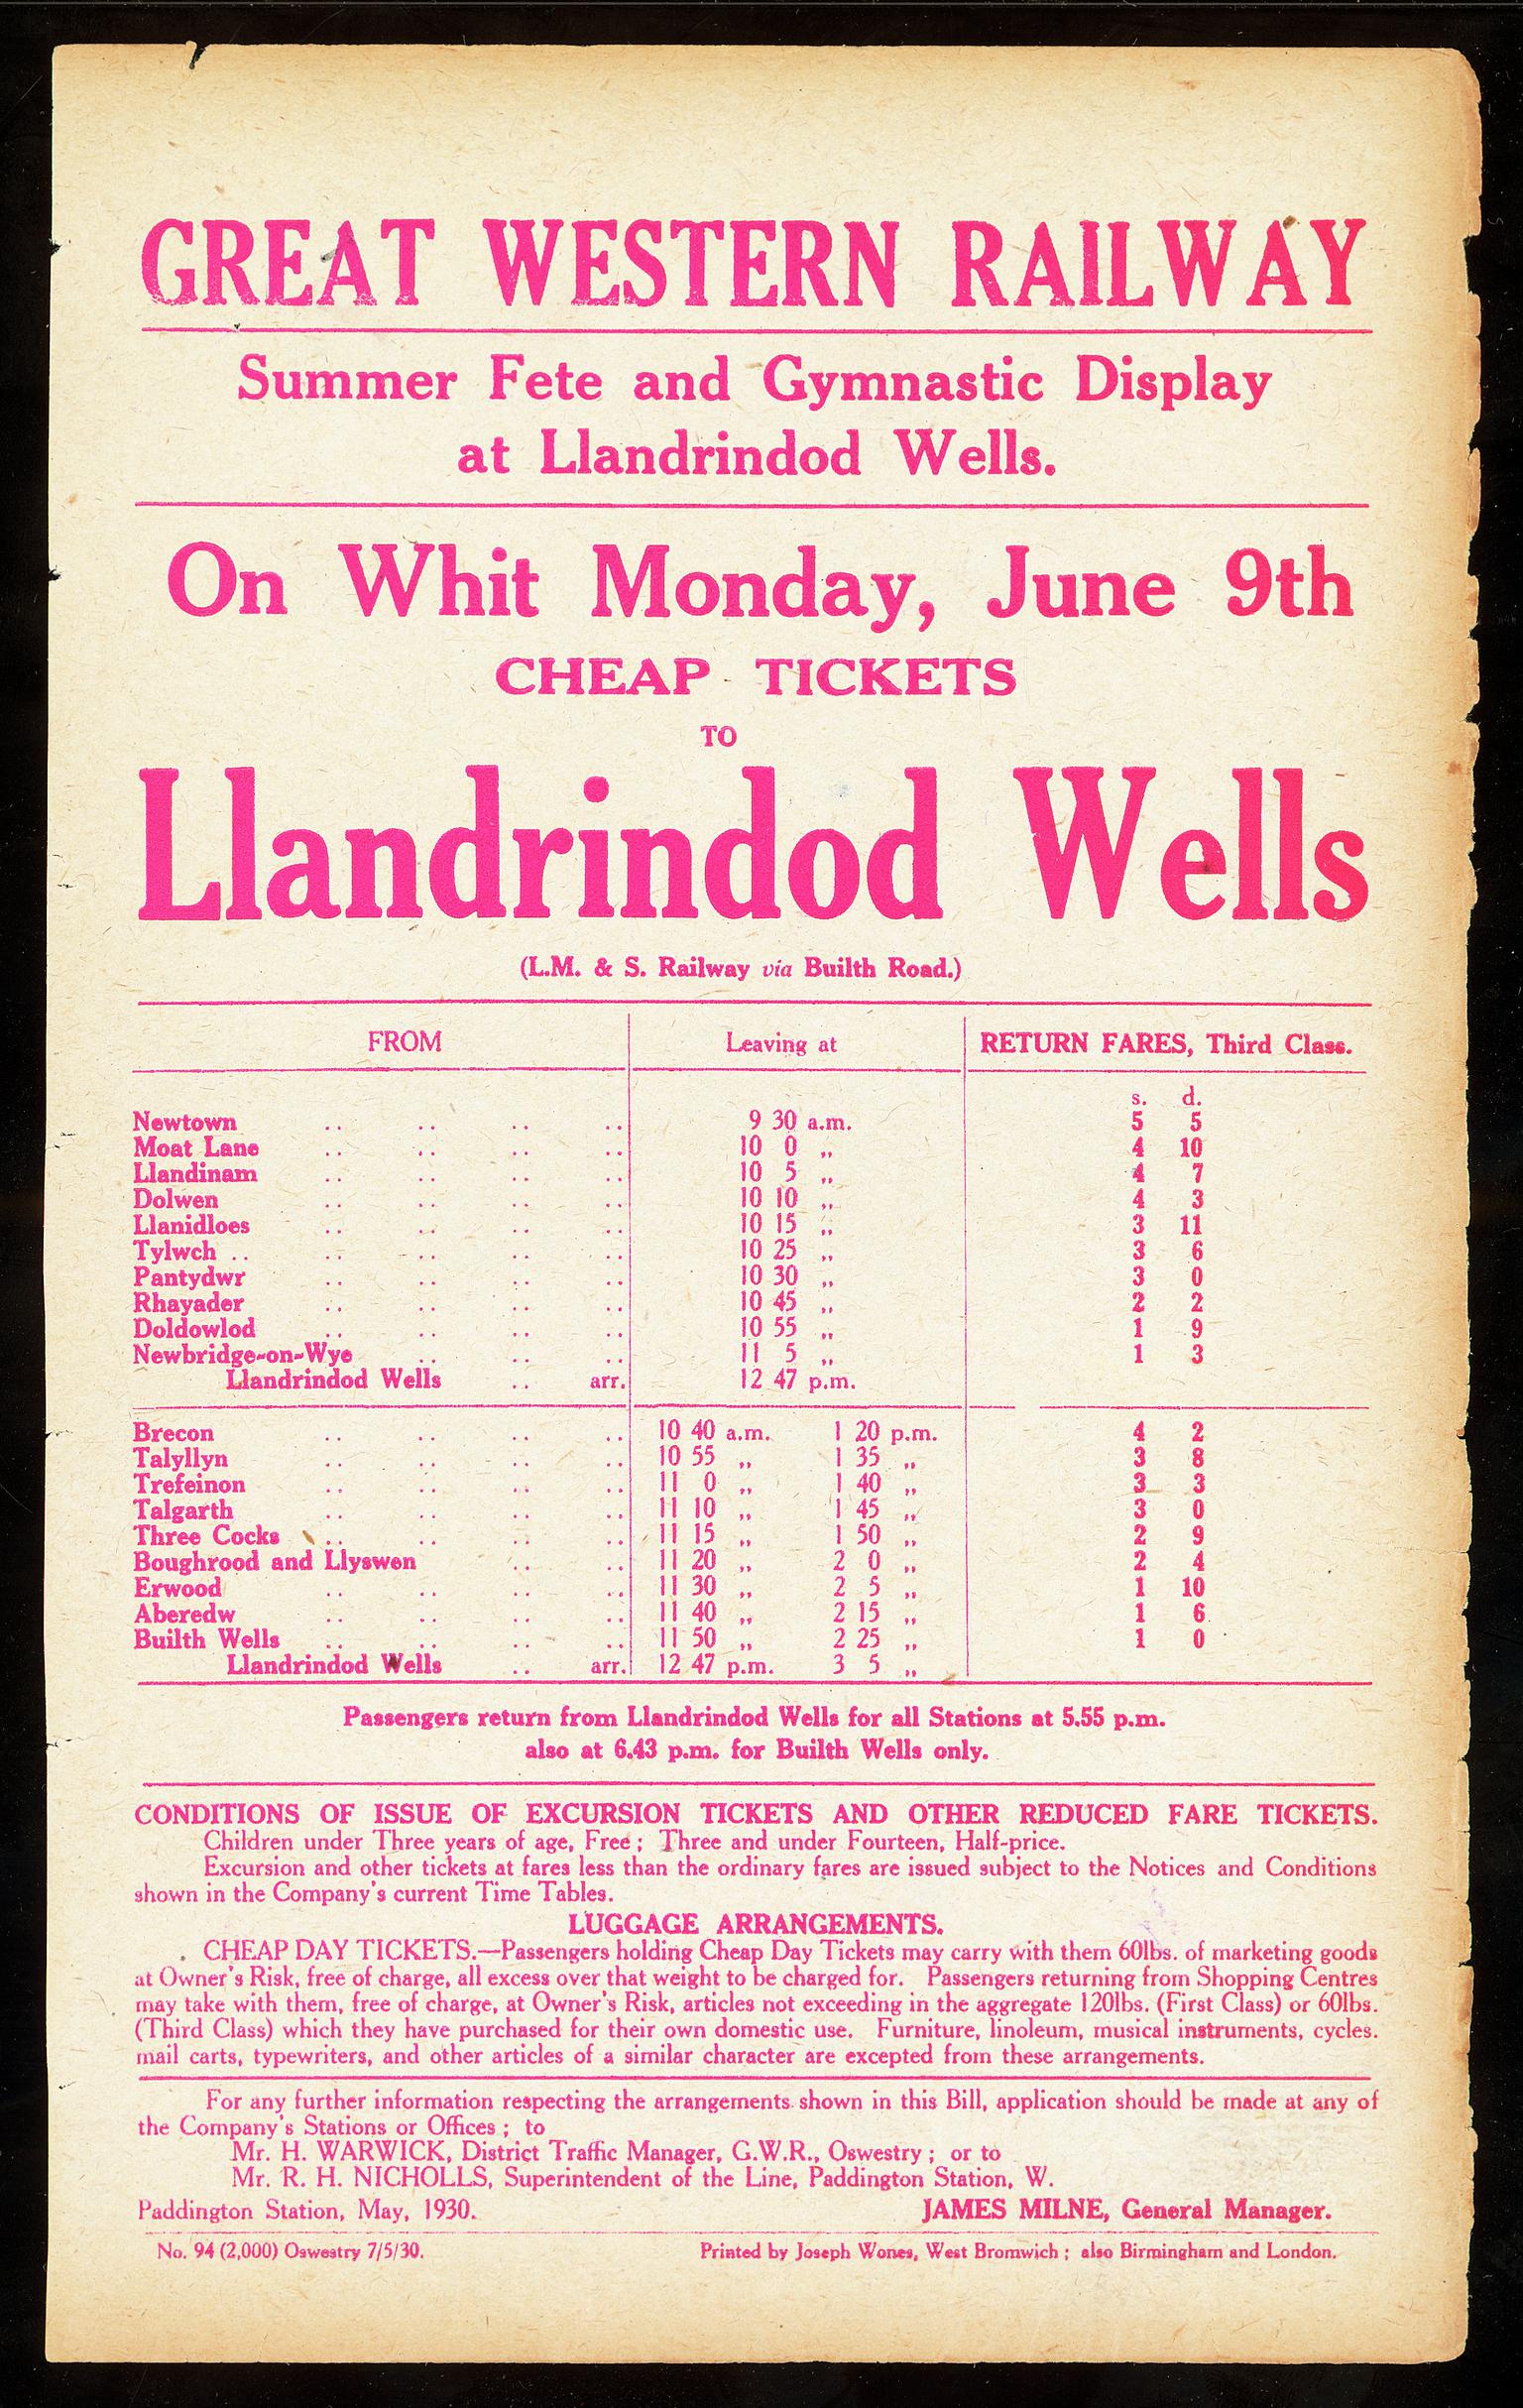 Great Western Railway, handbill